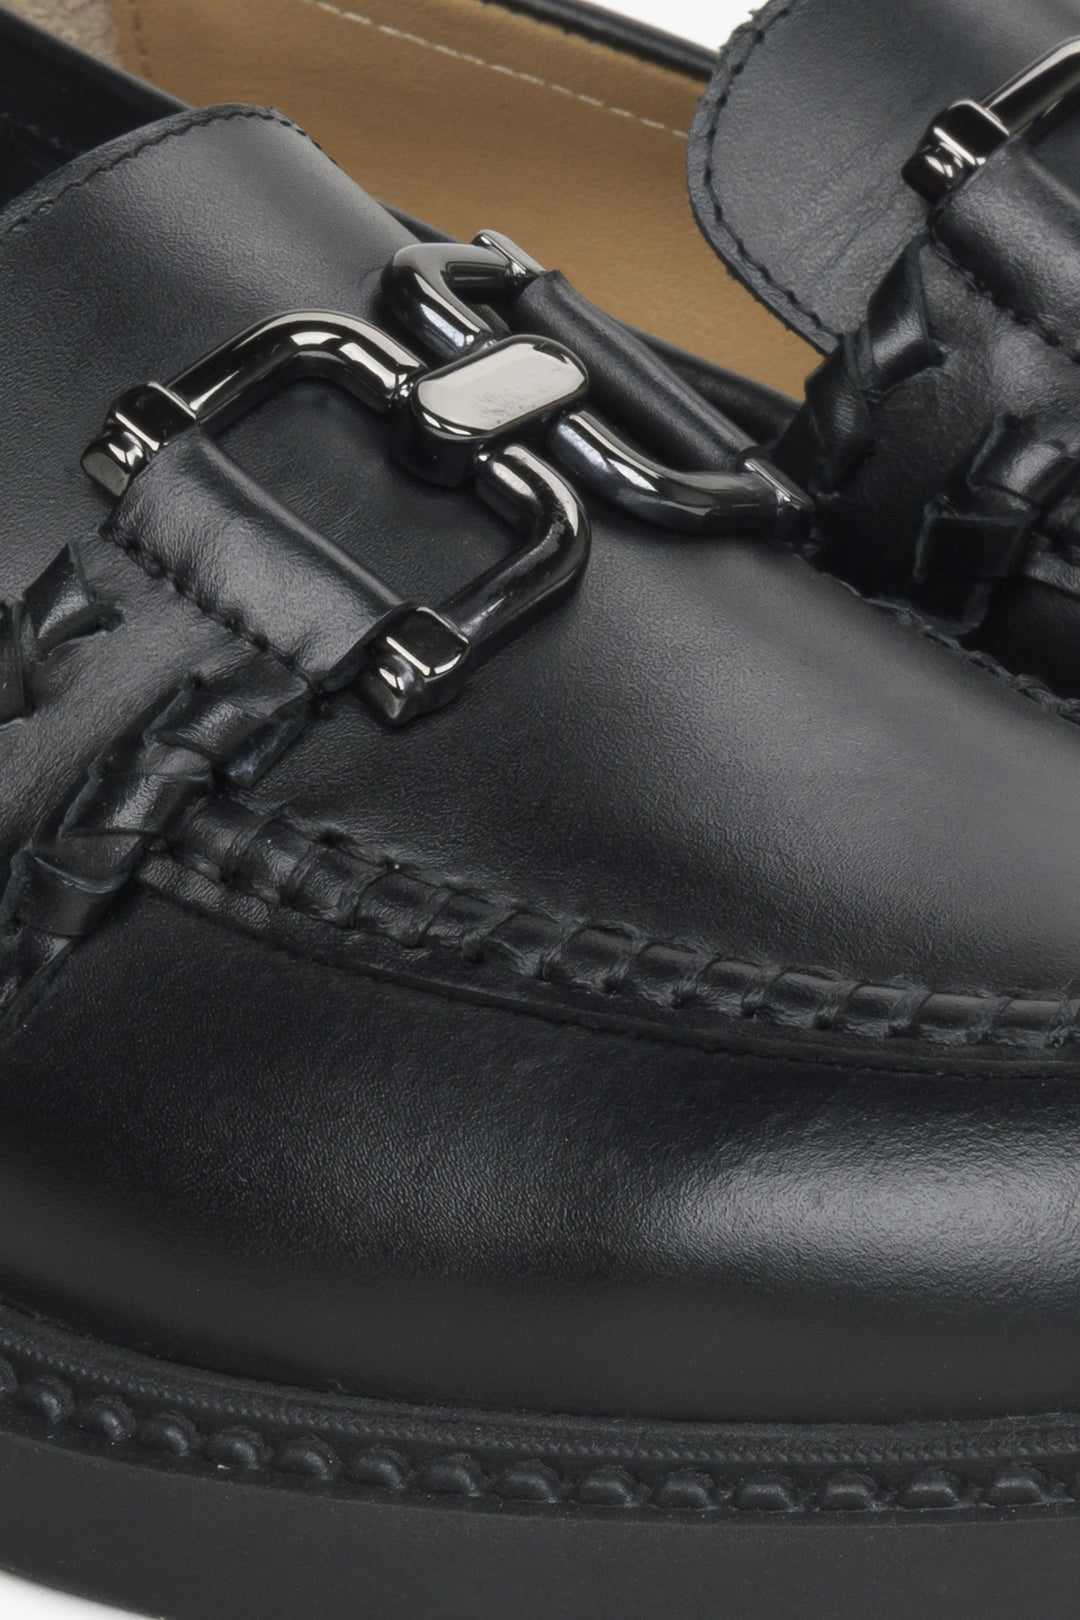 Estro women's black loafers - close-up on details.